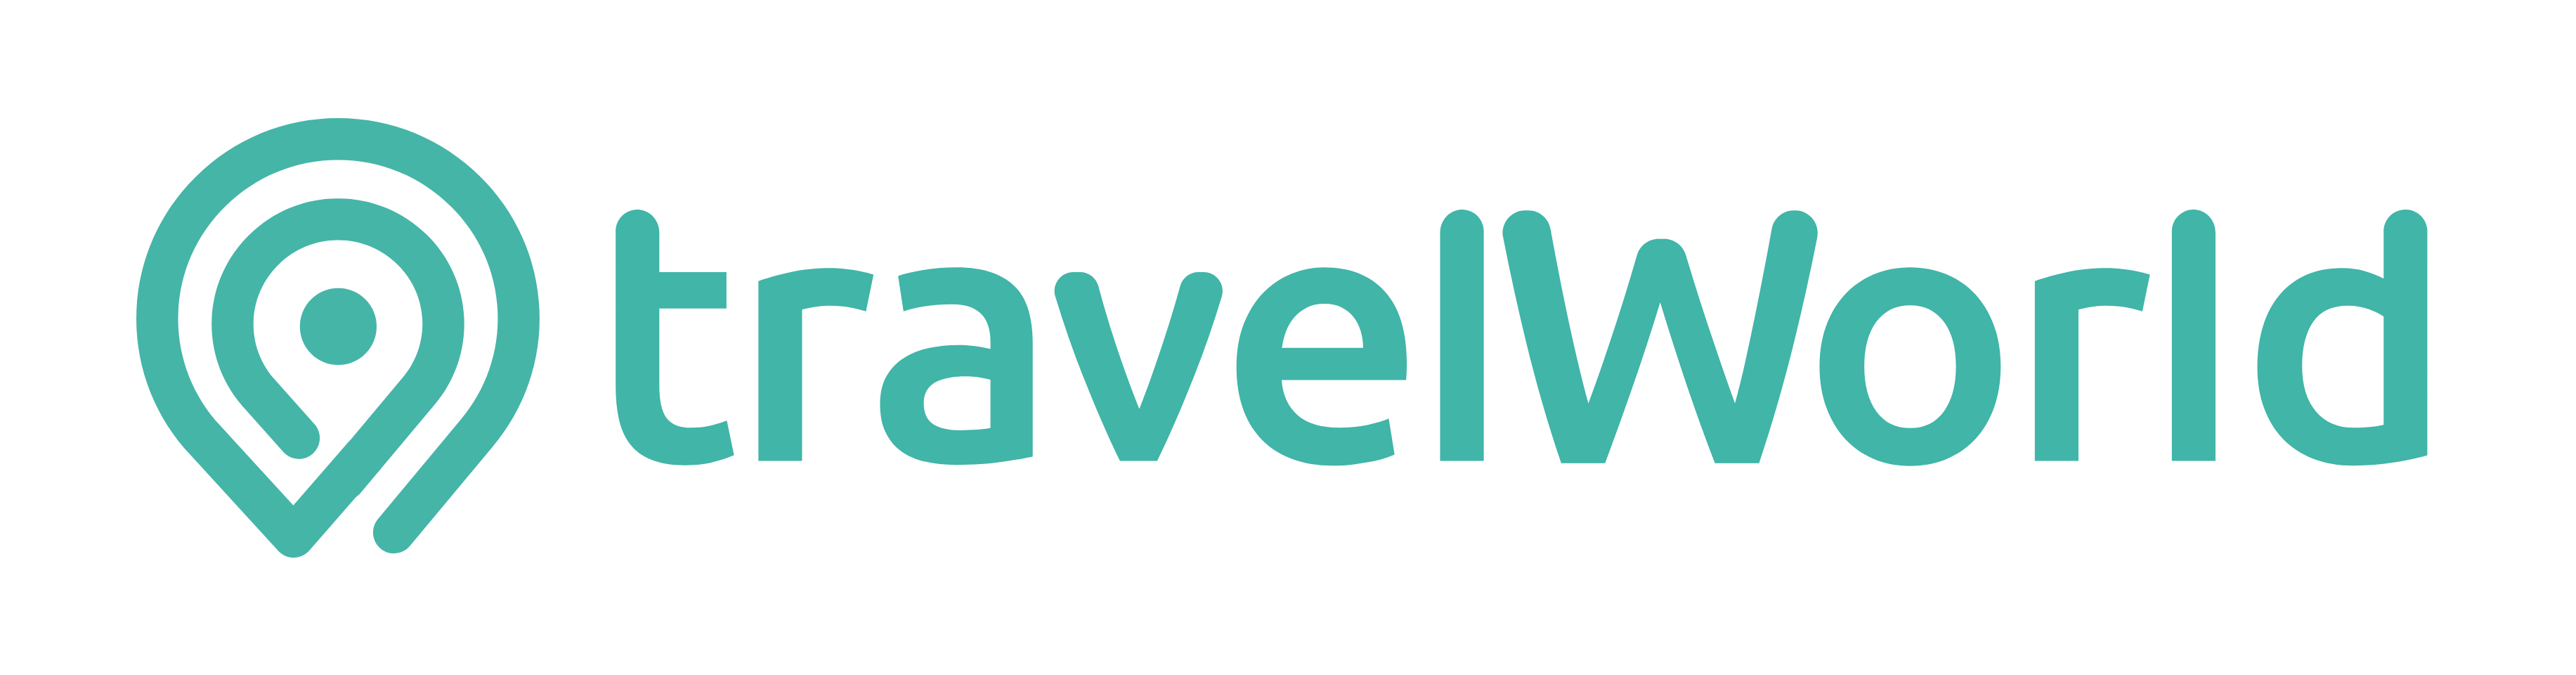 travelWorld - logo // ANIXE travel partner